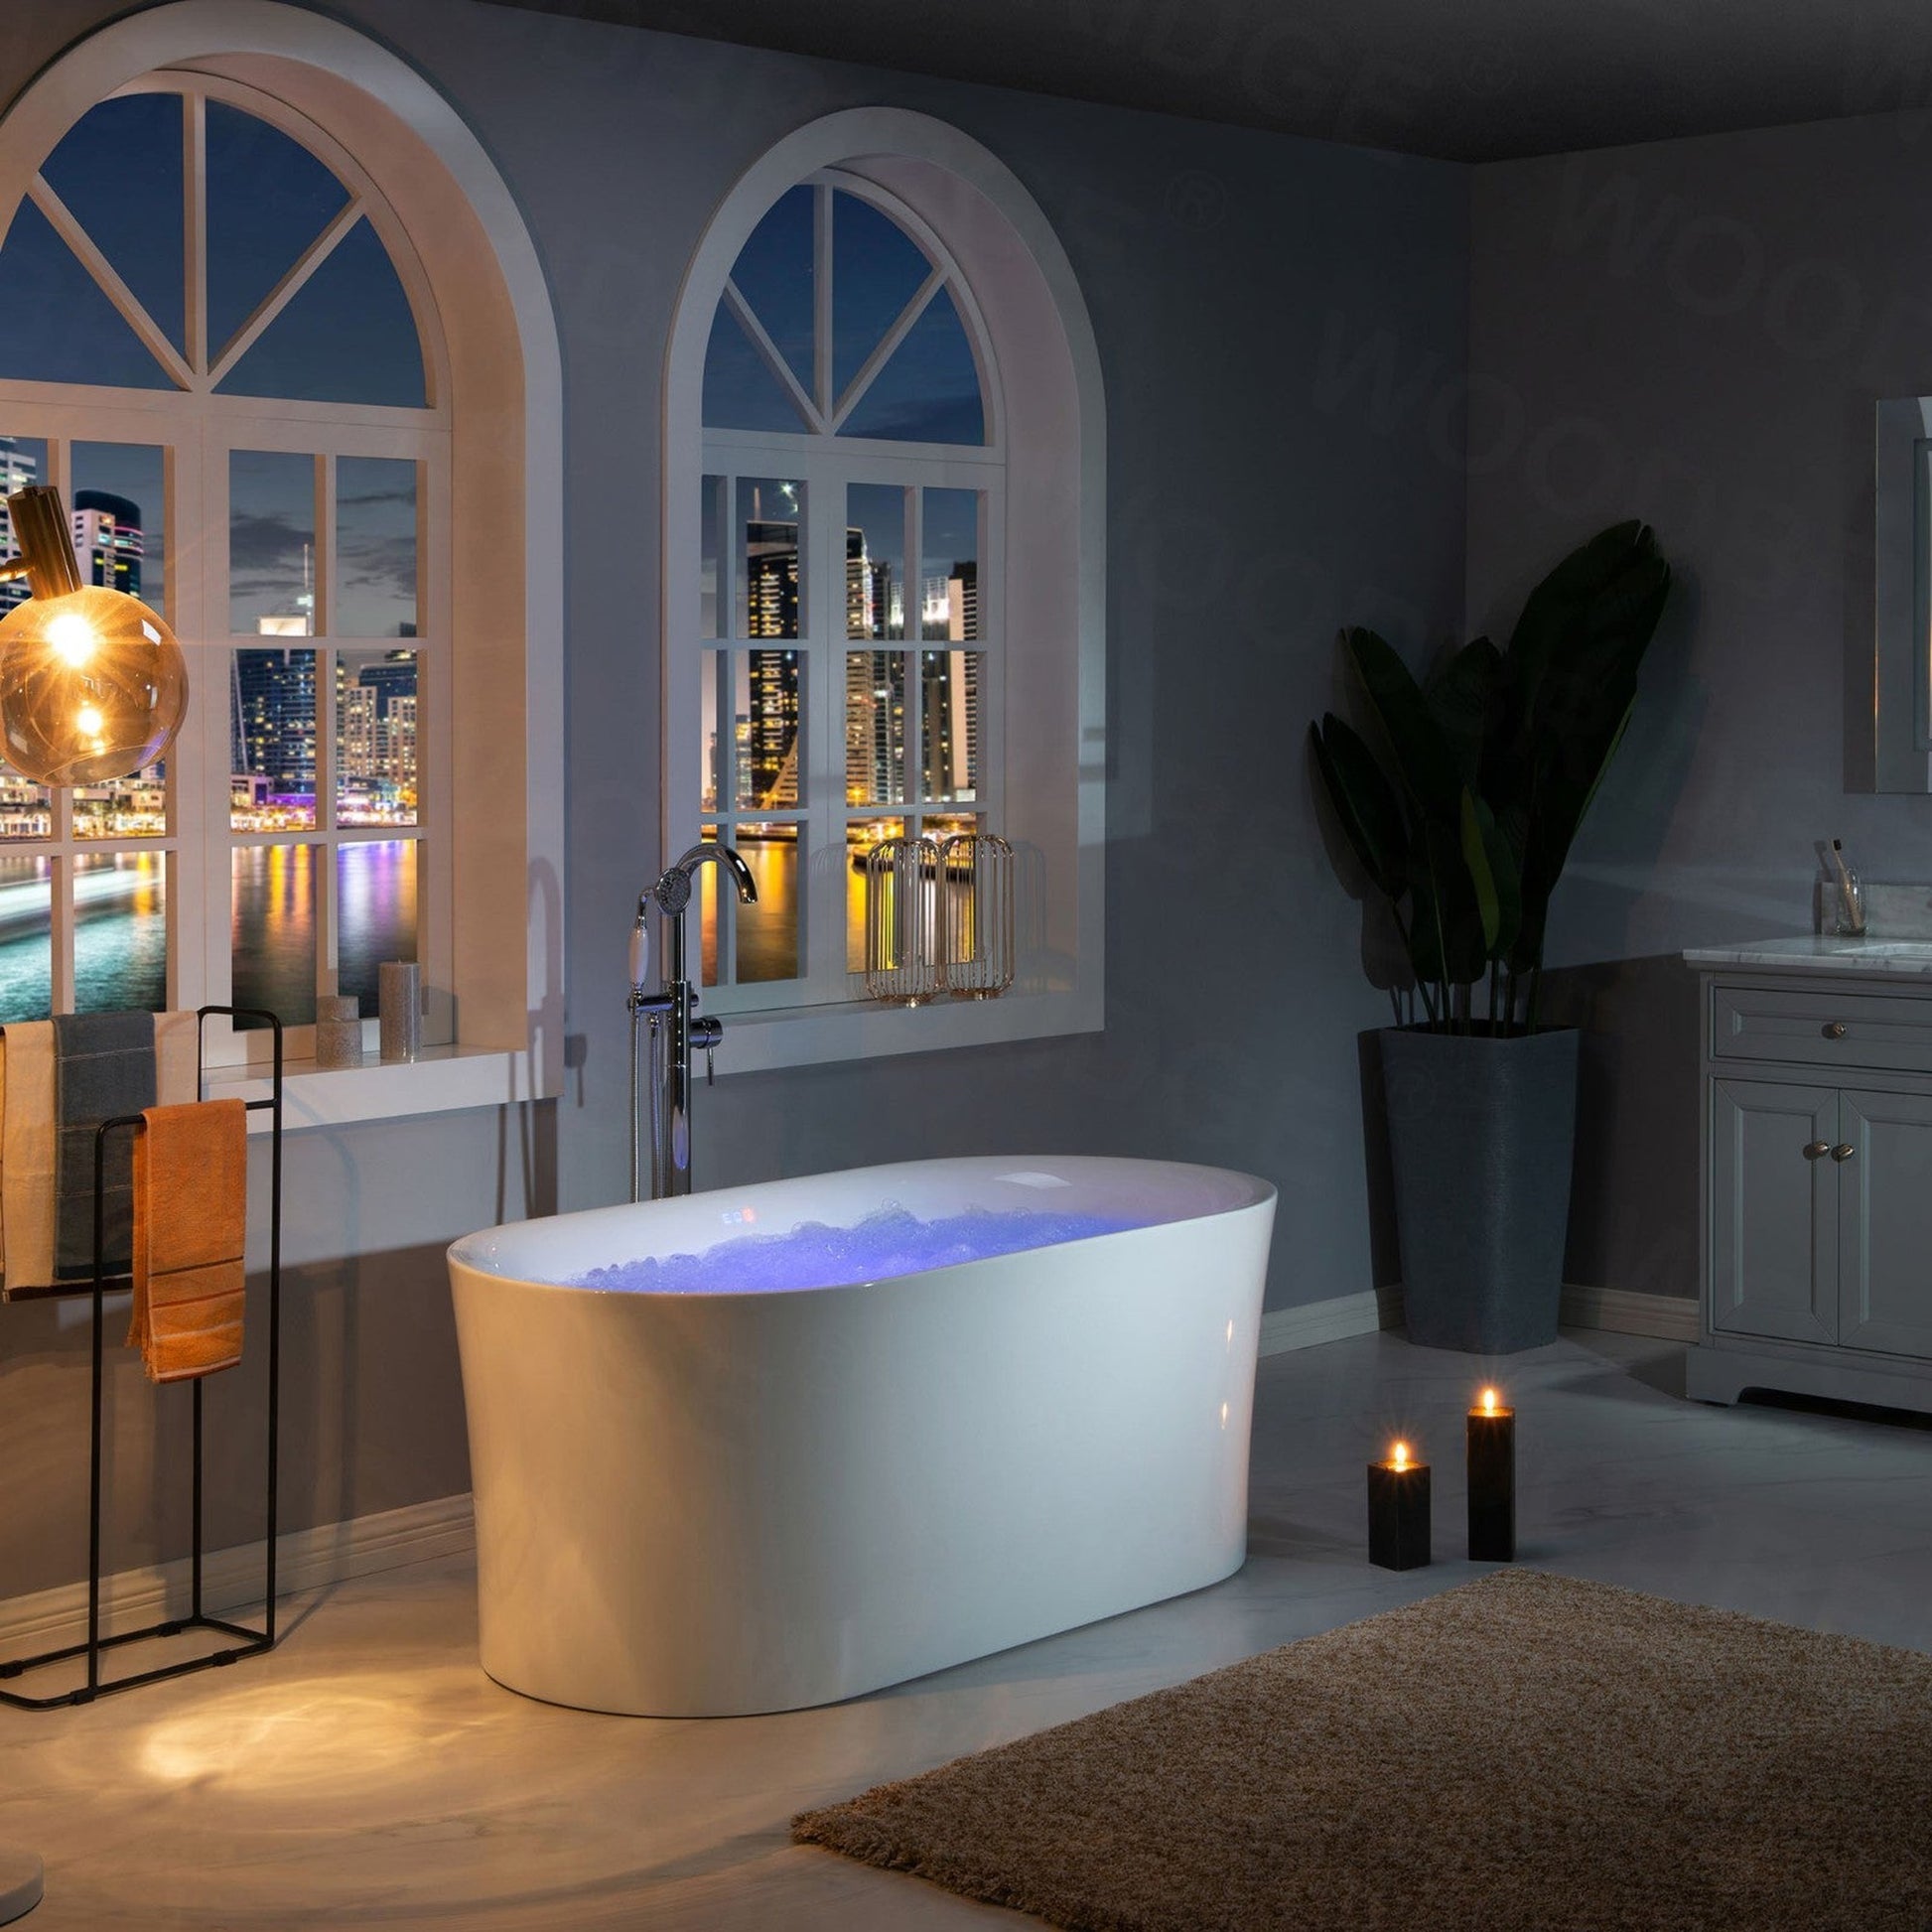 WoodBridge 59" White Acrylic Freestanding Air Bubble Soaking Bathtub With Chrome Overflow and Drain Finish